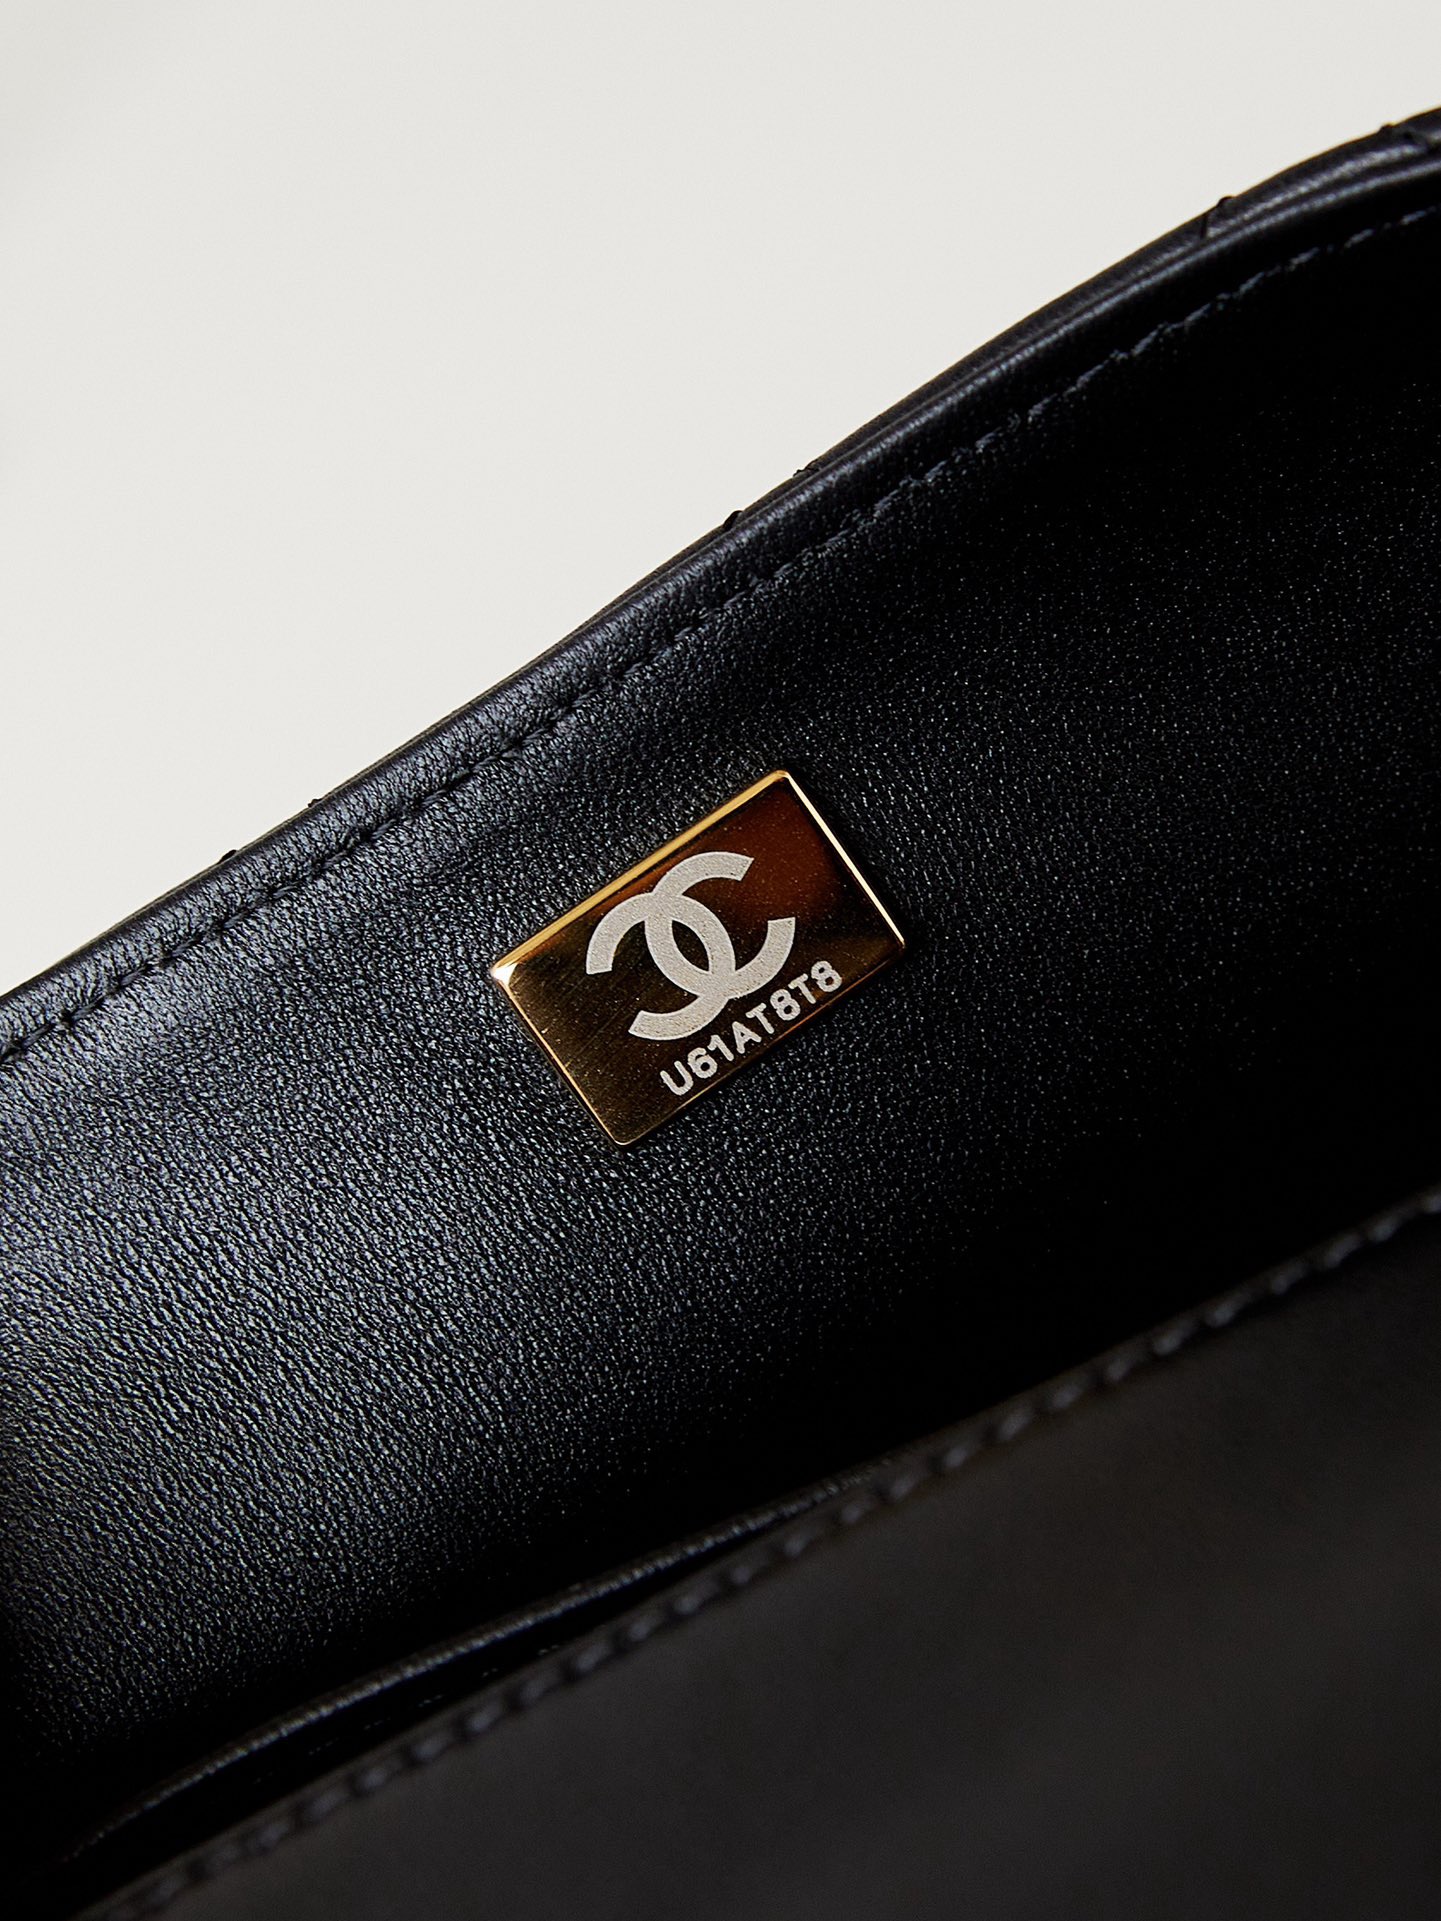 Chanel MINI FLAP BAG AS4385 black